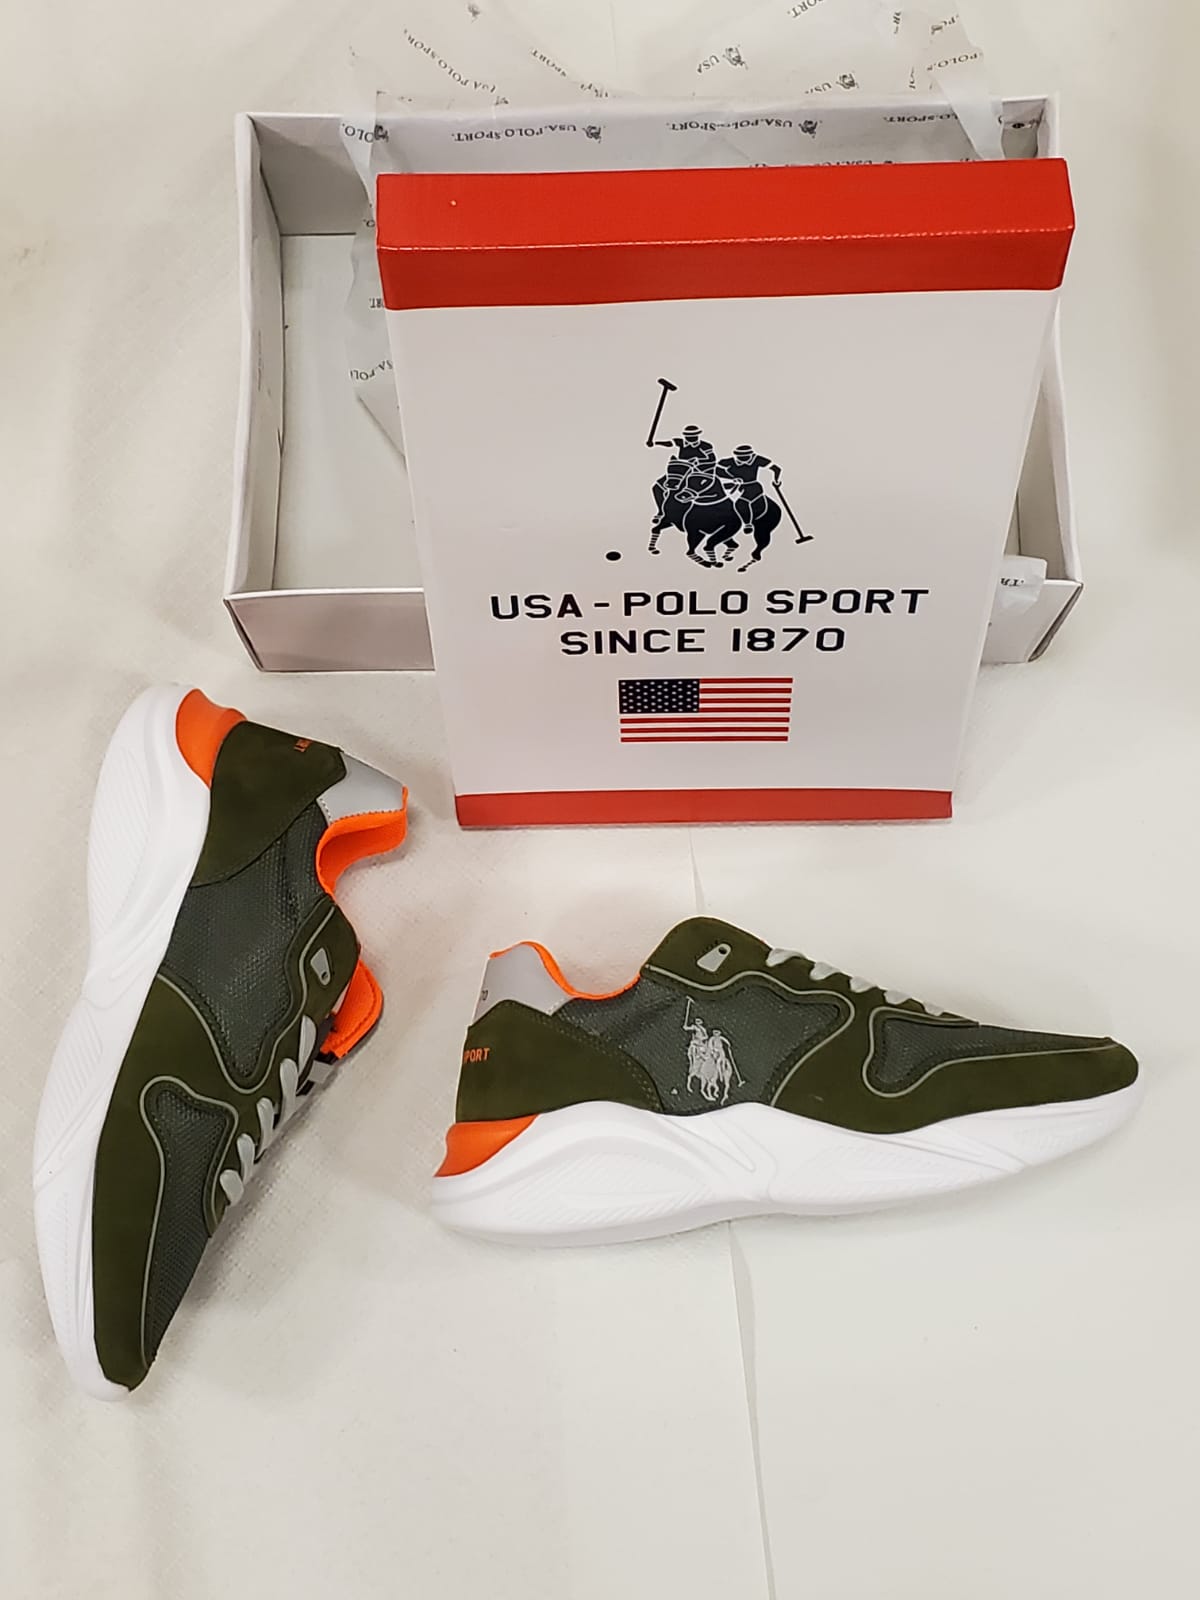 USA Polo обувь. USA Polo обувь 2020. Sport since